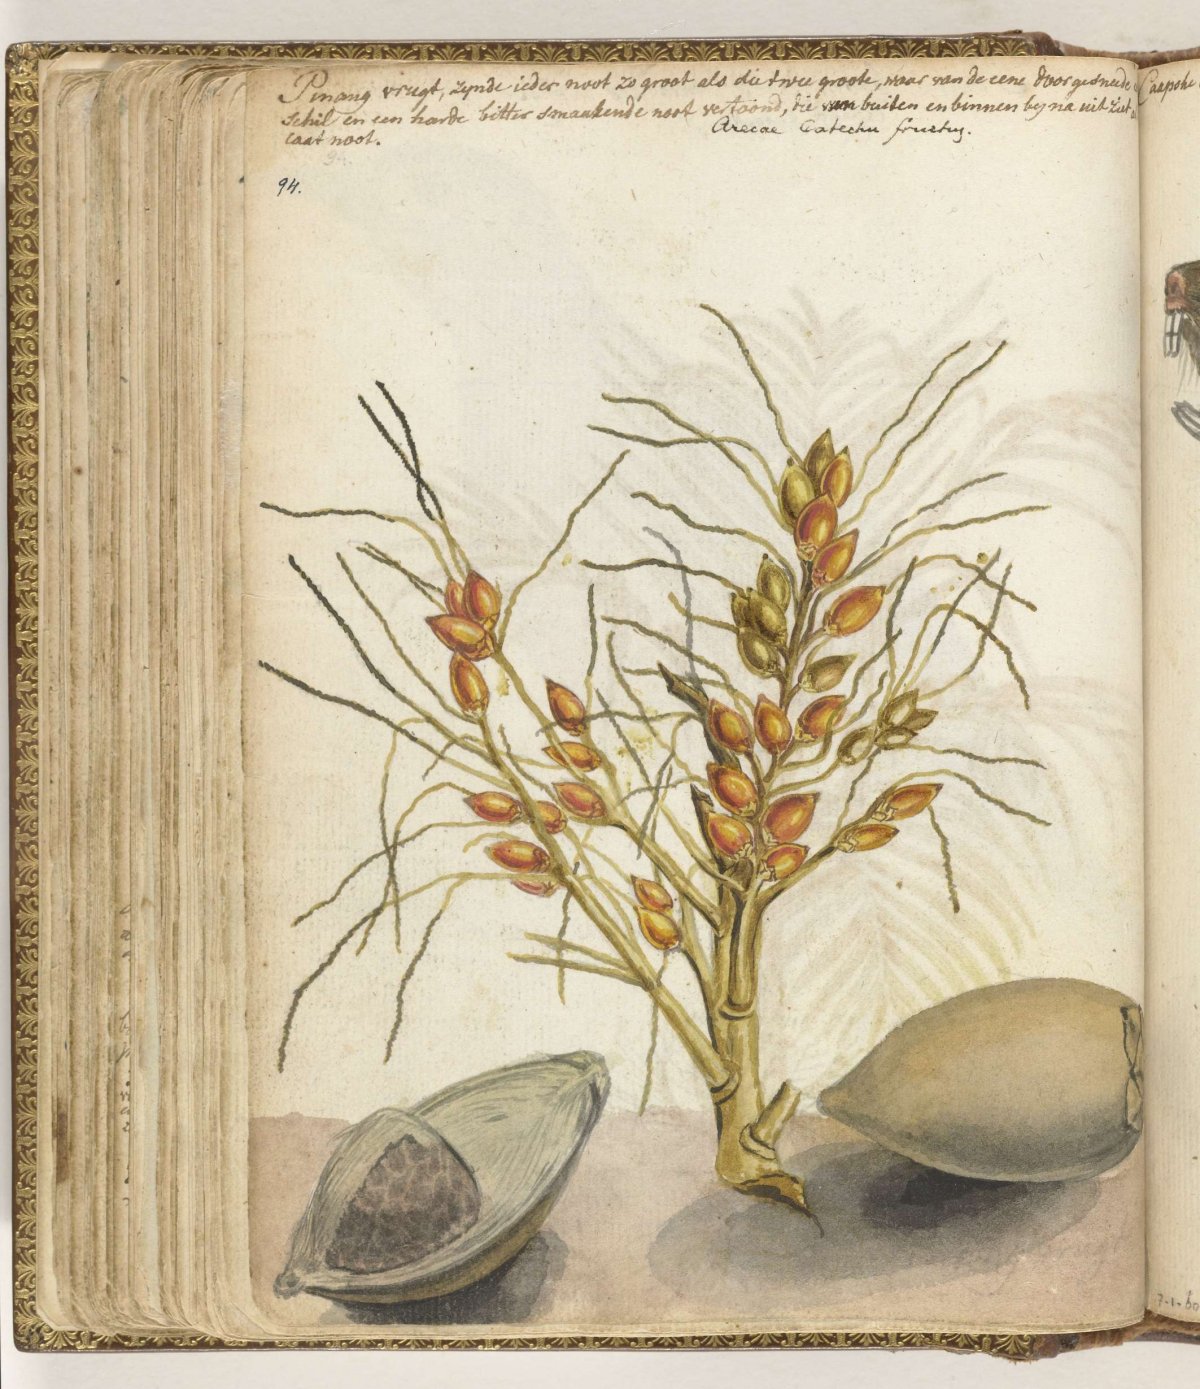 Pinangvruchten, Jan Brandes, 1785 - 1786